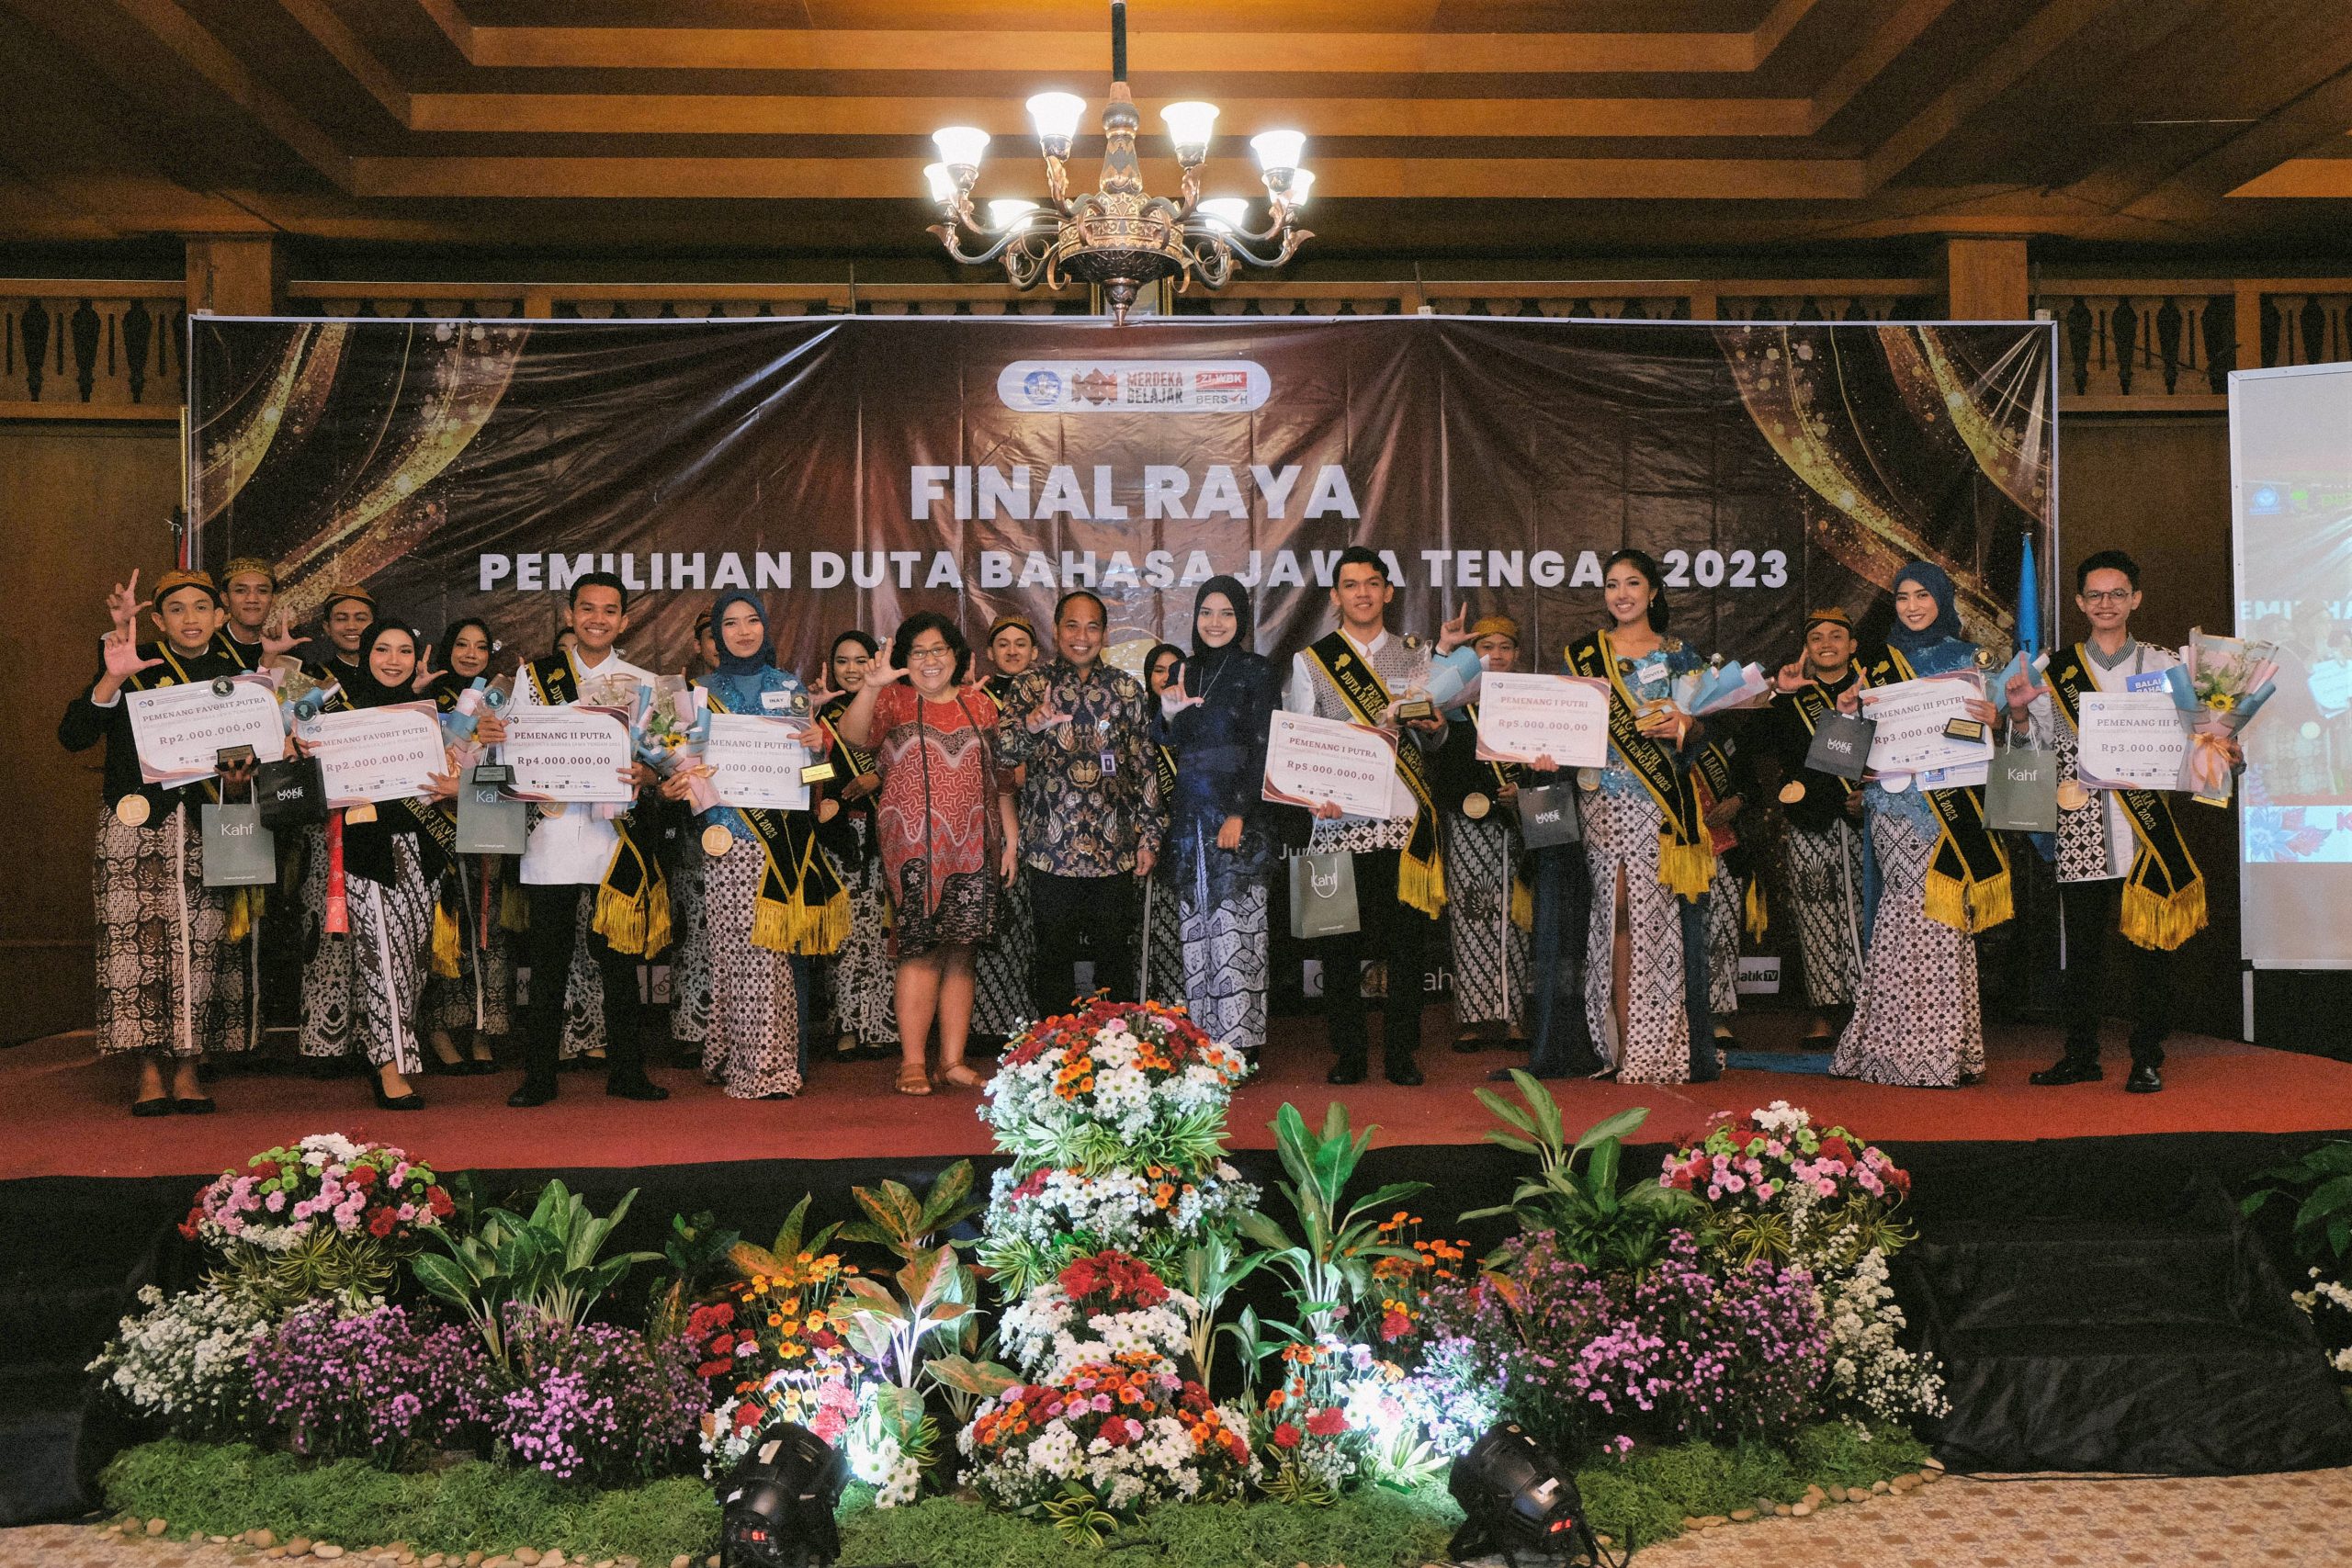 Kabupaten Batang dan Kota Semarang Menangi Pemilihan Duta Bahasa Jawa Tengah 2023